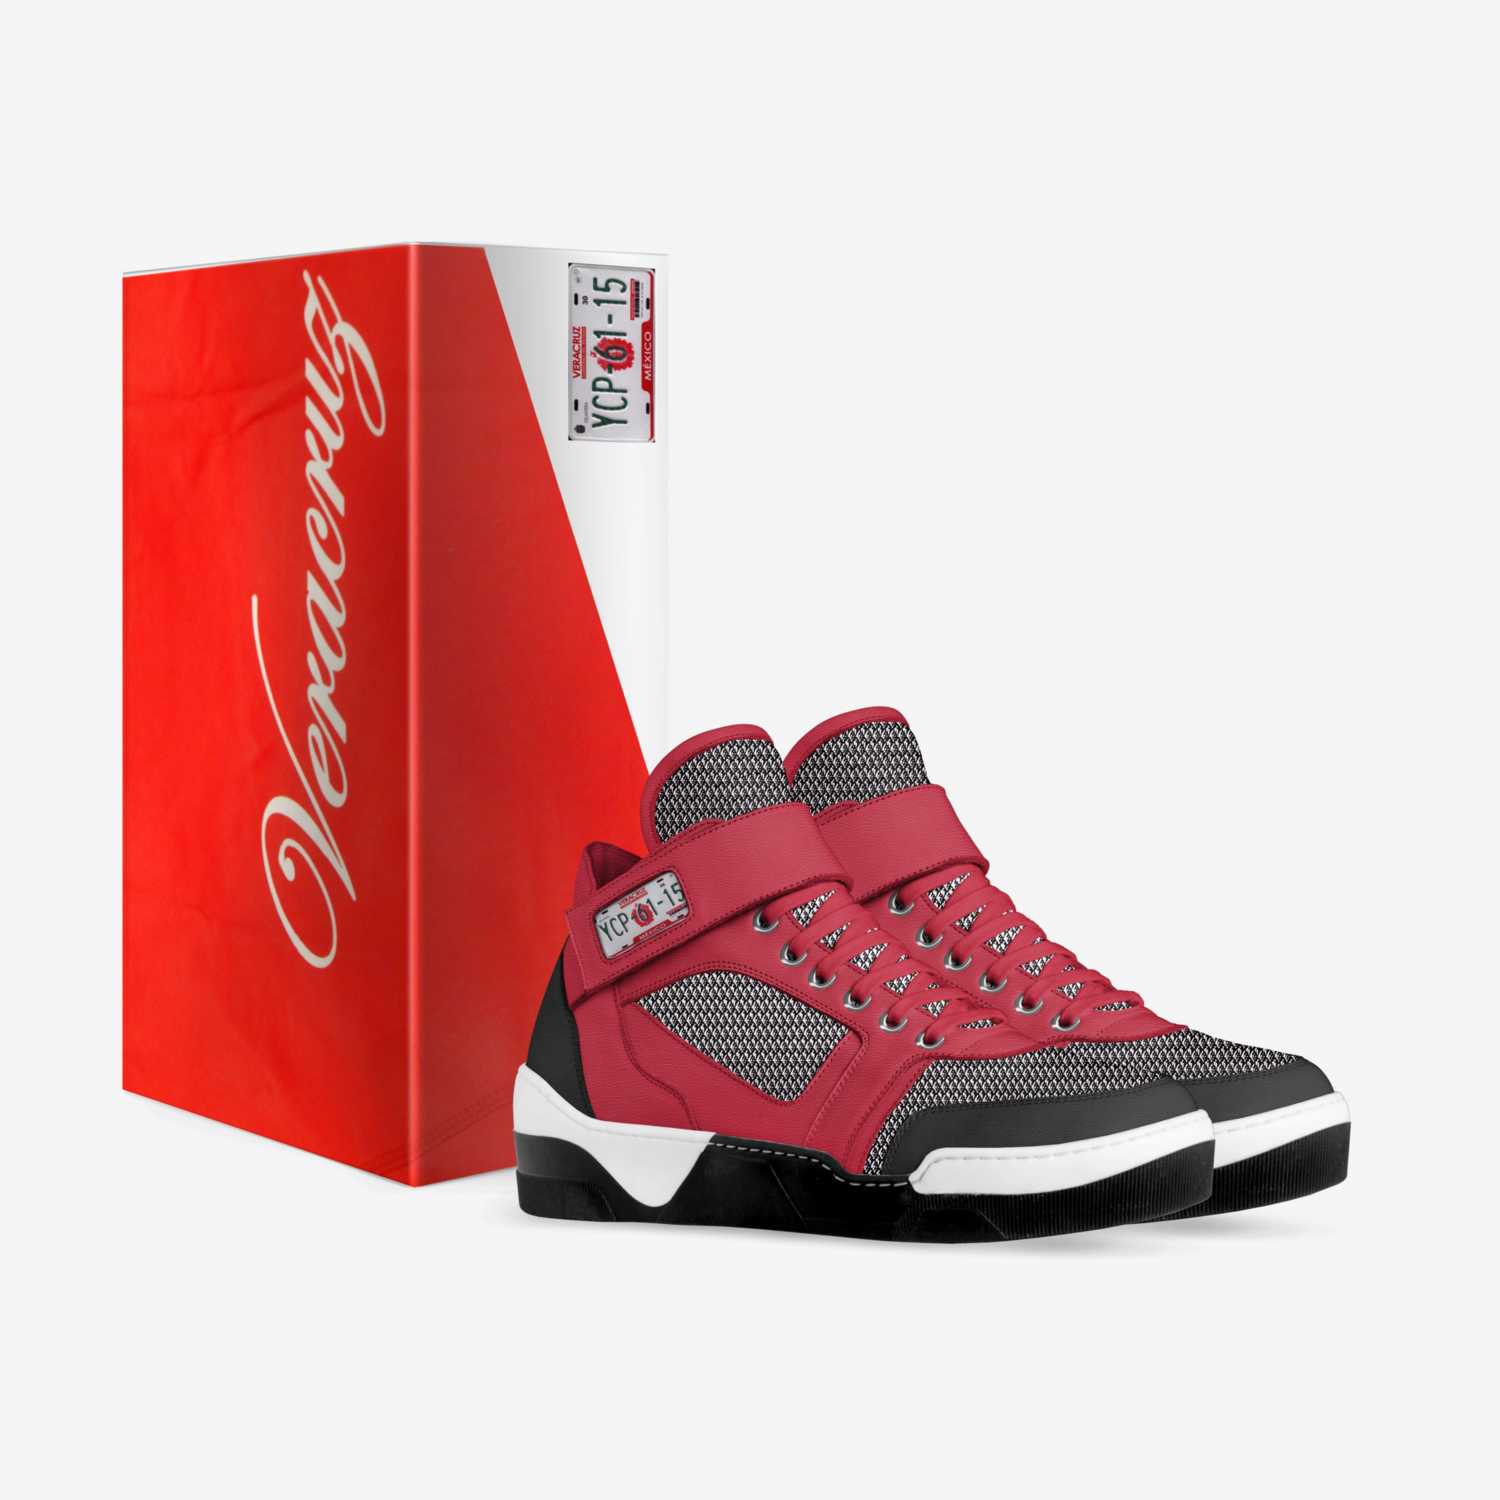 Veracruzanos custom made in Italy shoes by David Lawrence | Box view